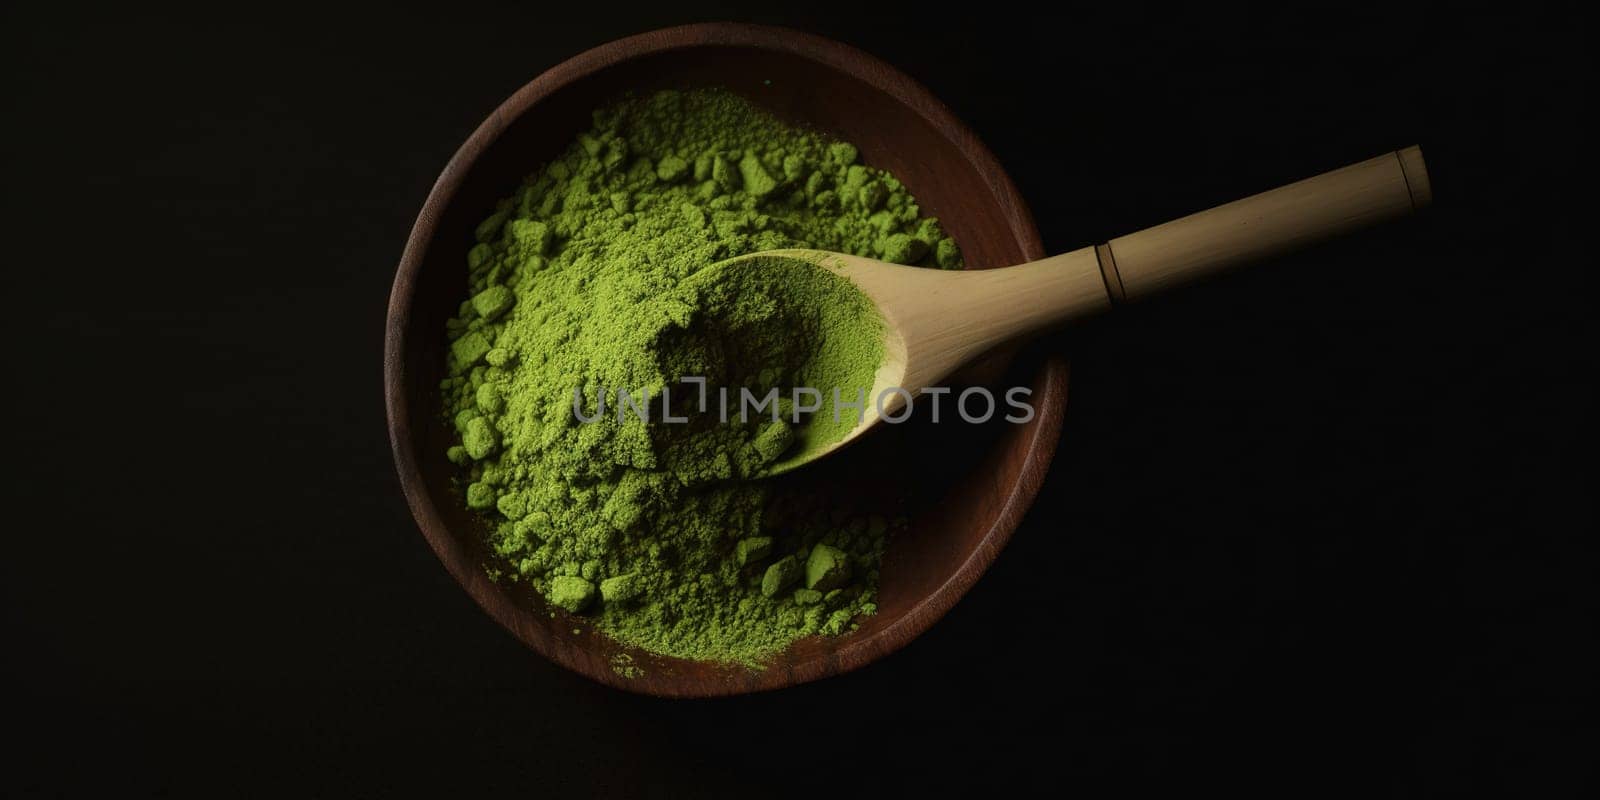 Matcha green tea powder by GekaSkr